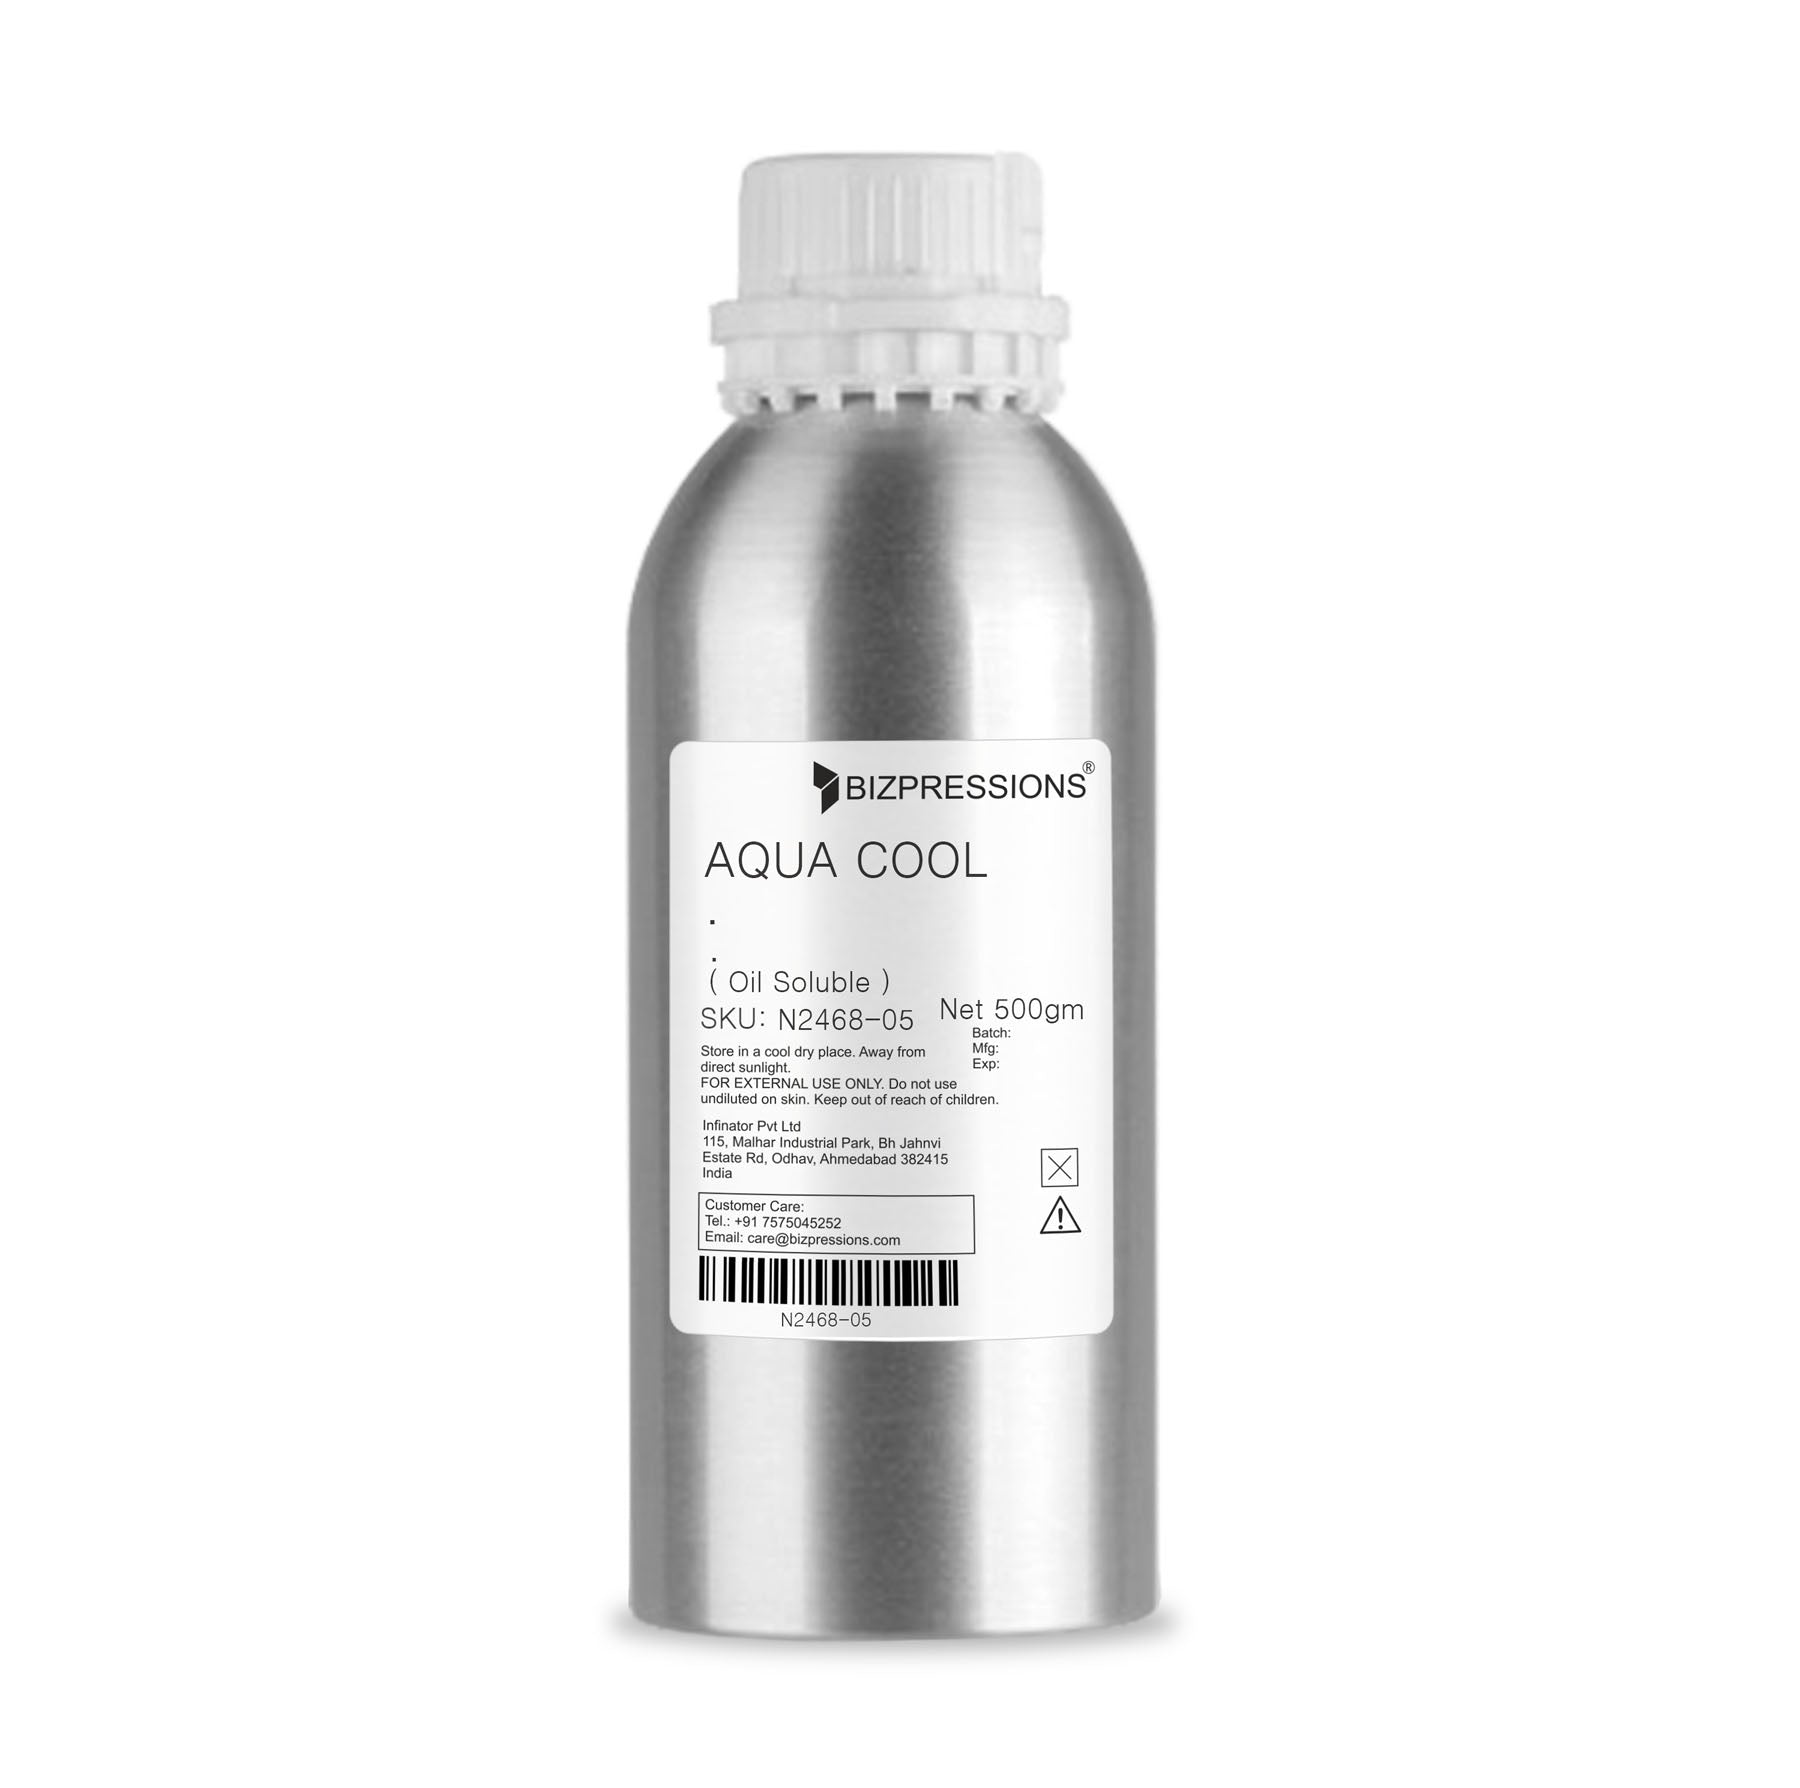 AQUA COOL - Fragrance ( Oil Soluble ) - 500 gm